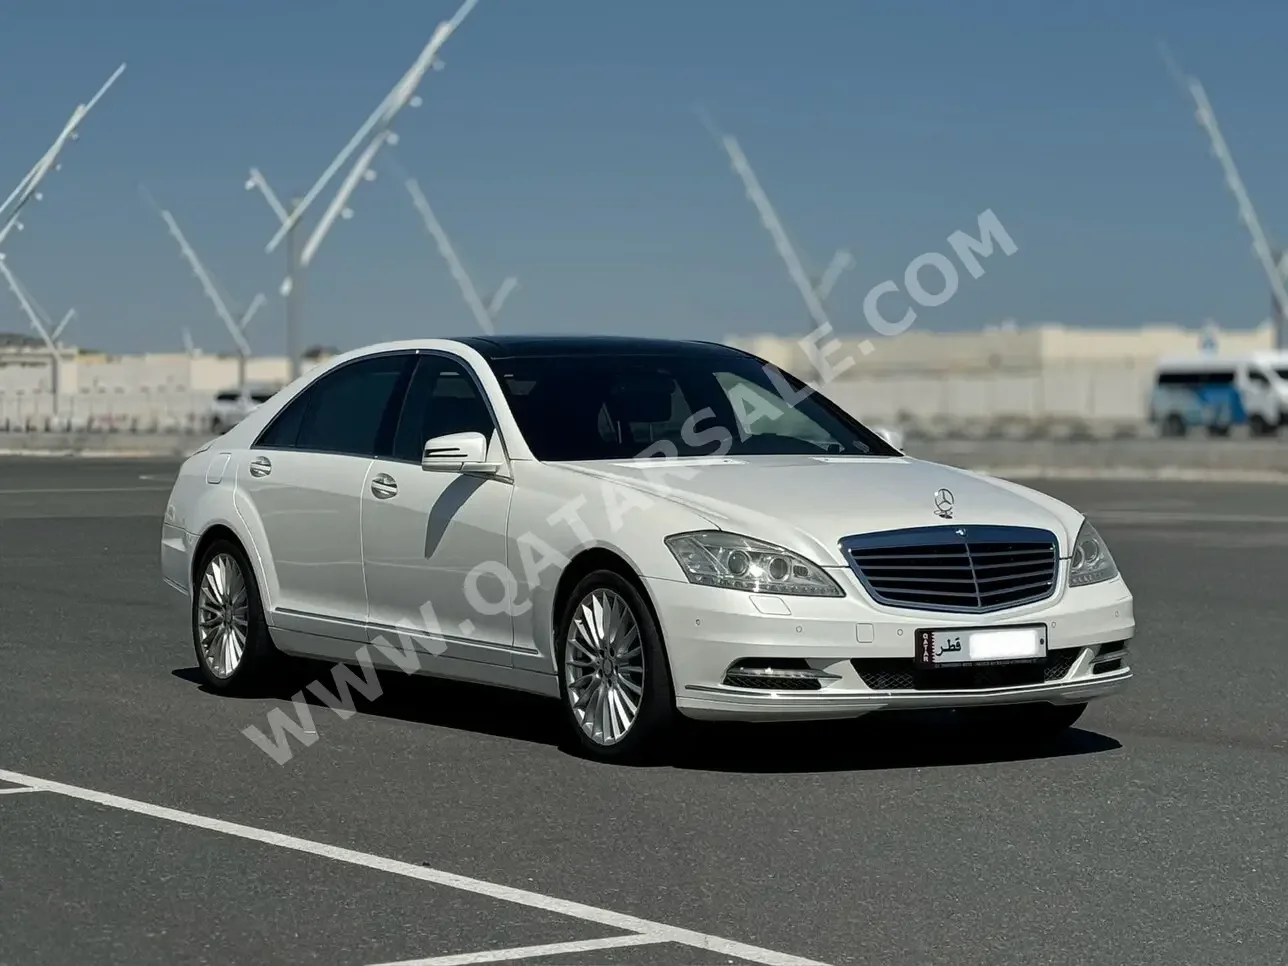 Mercedes-Benz  S-Class  300  2013  Automatic  71,000 Km  6 Cylinder  Rear Wheel Drive (RWD)  Sedan  White